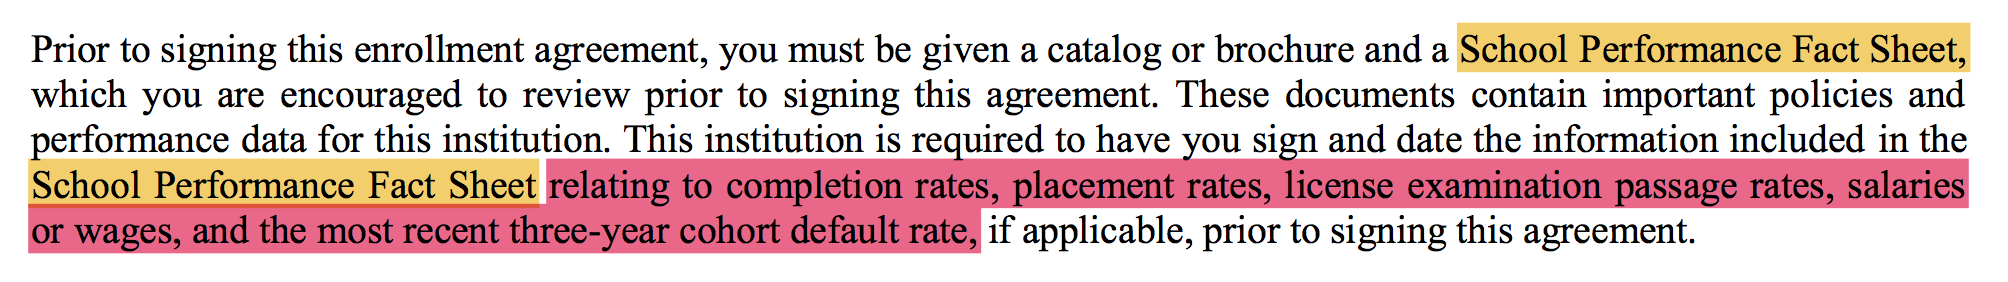 Redwood Enrollment Agreement passage